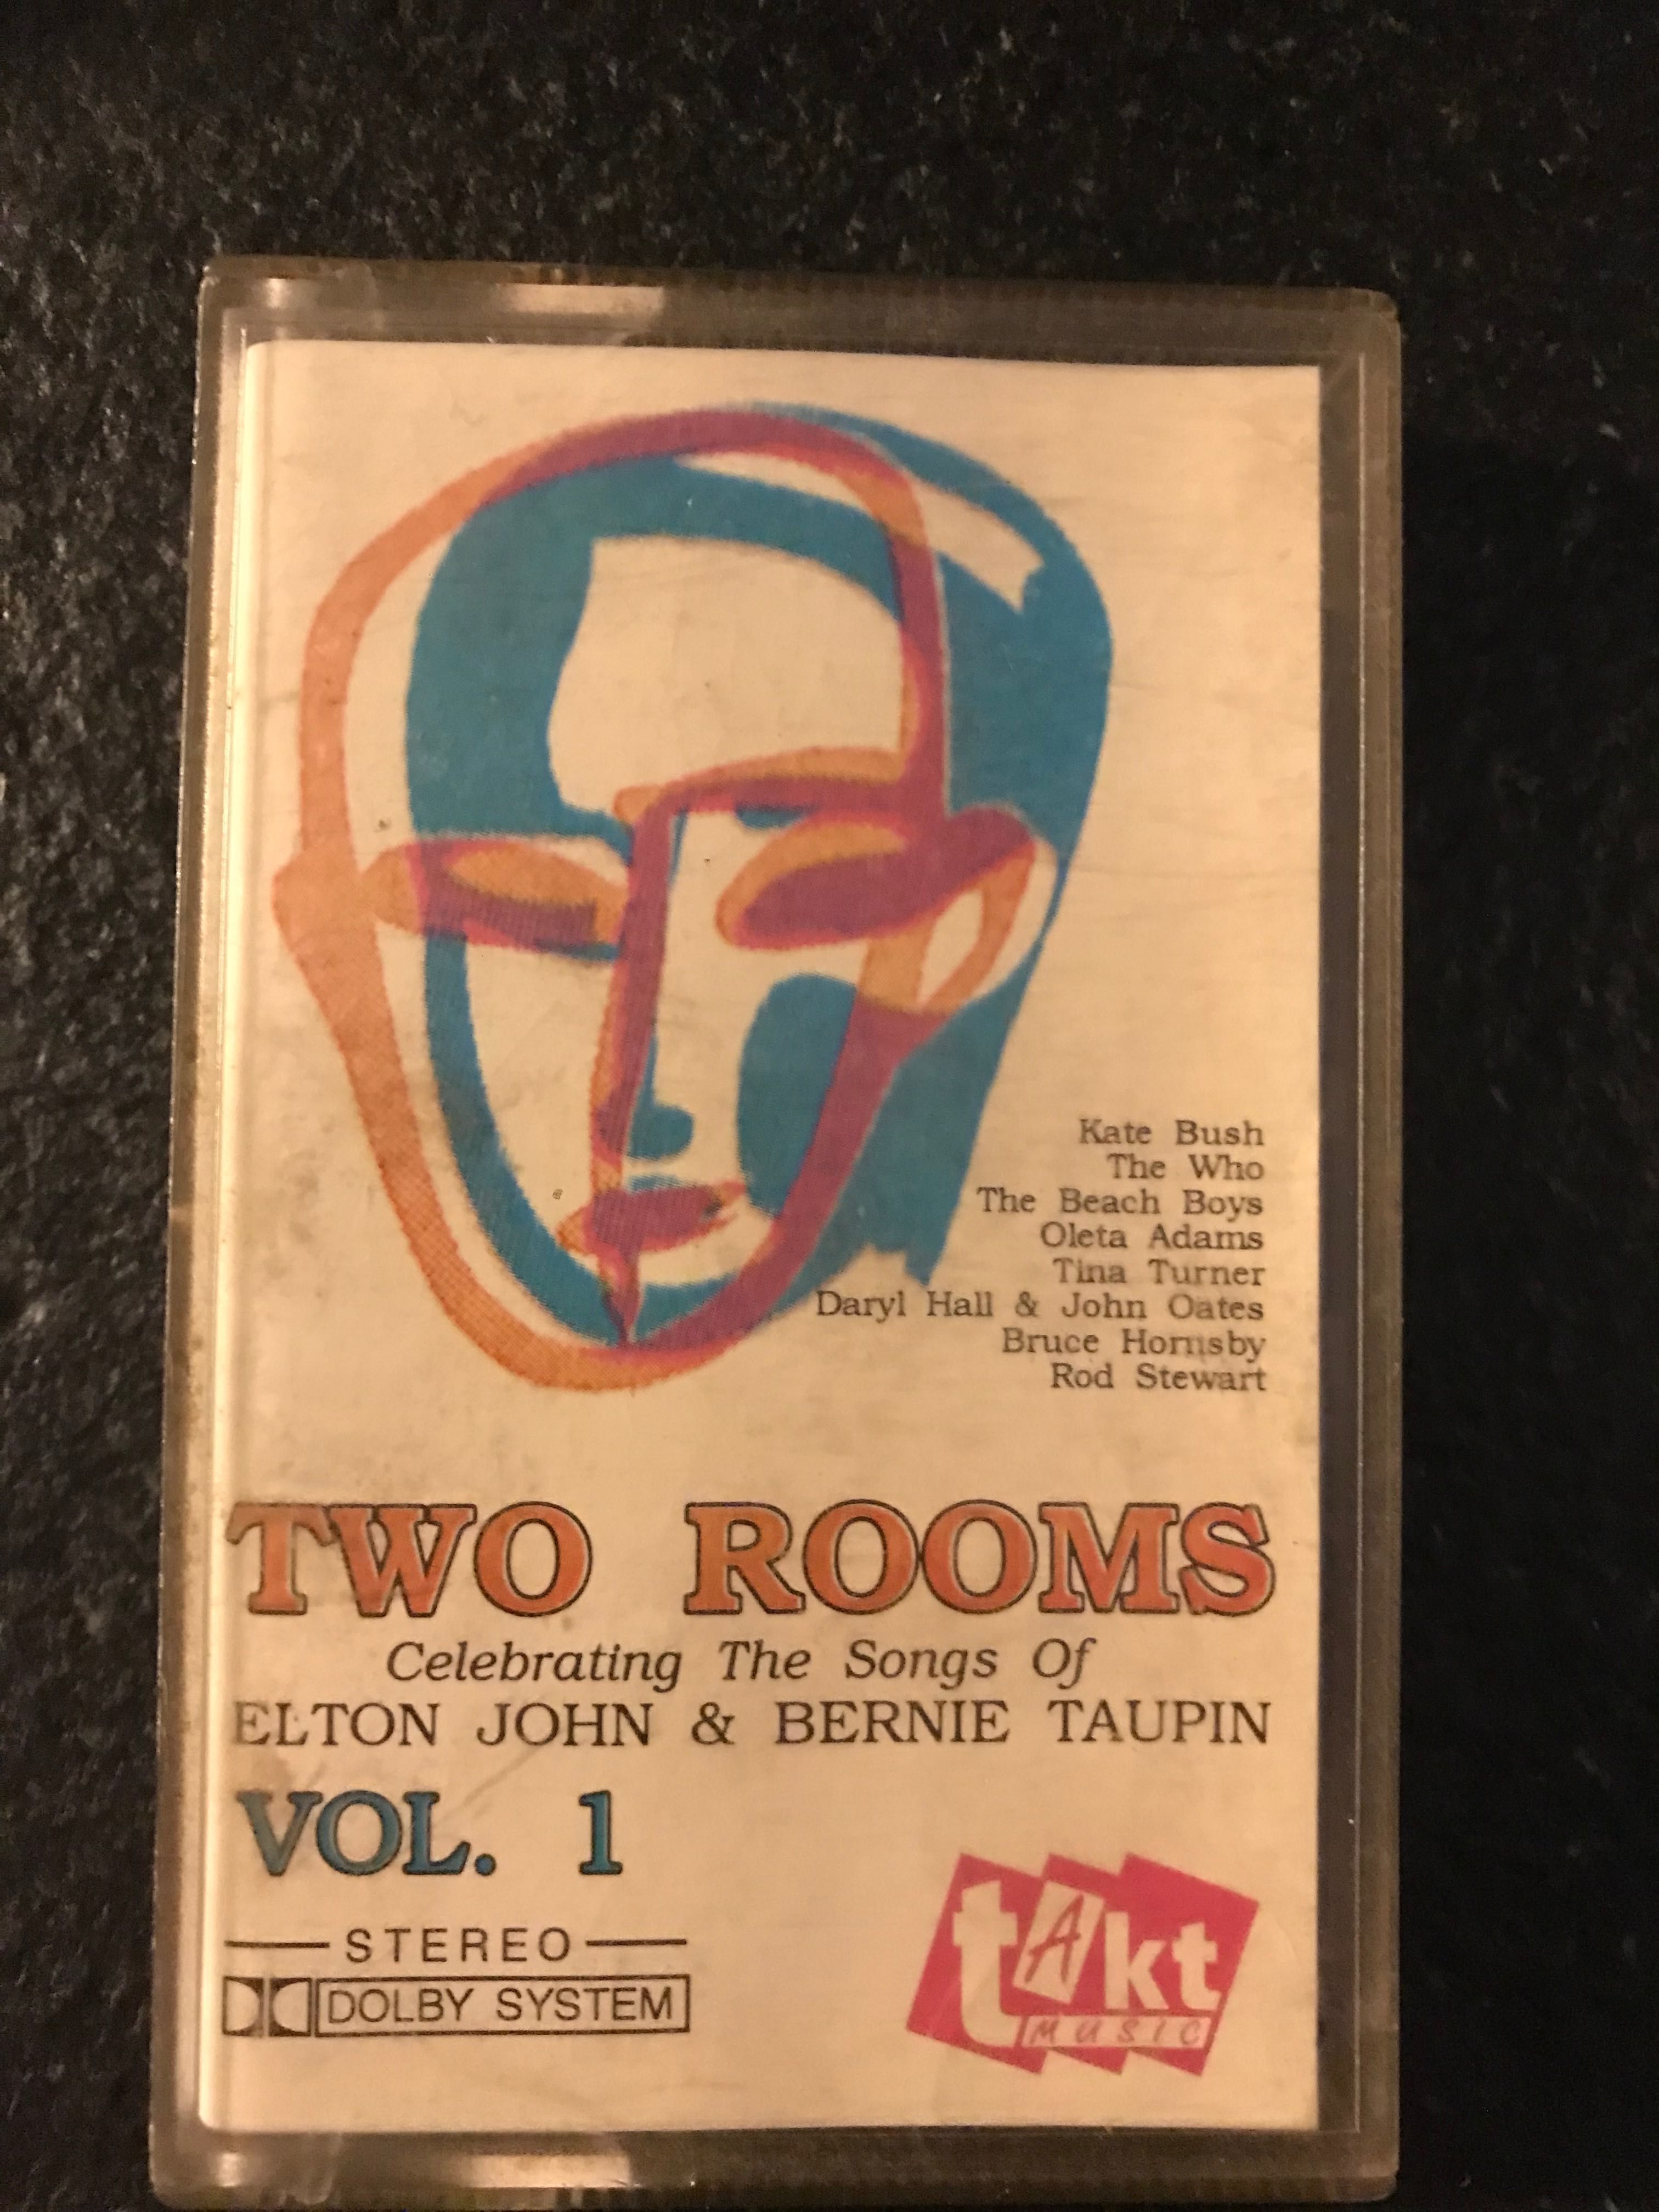 Two Rooms: Celebrating The Songs Of Elton John & Bernie Taupin Vol. 1